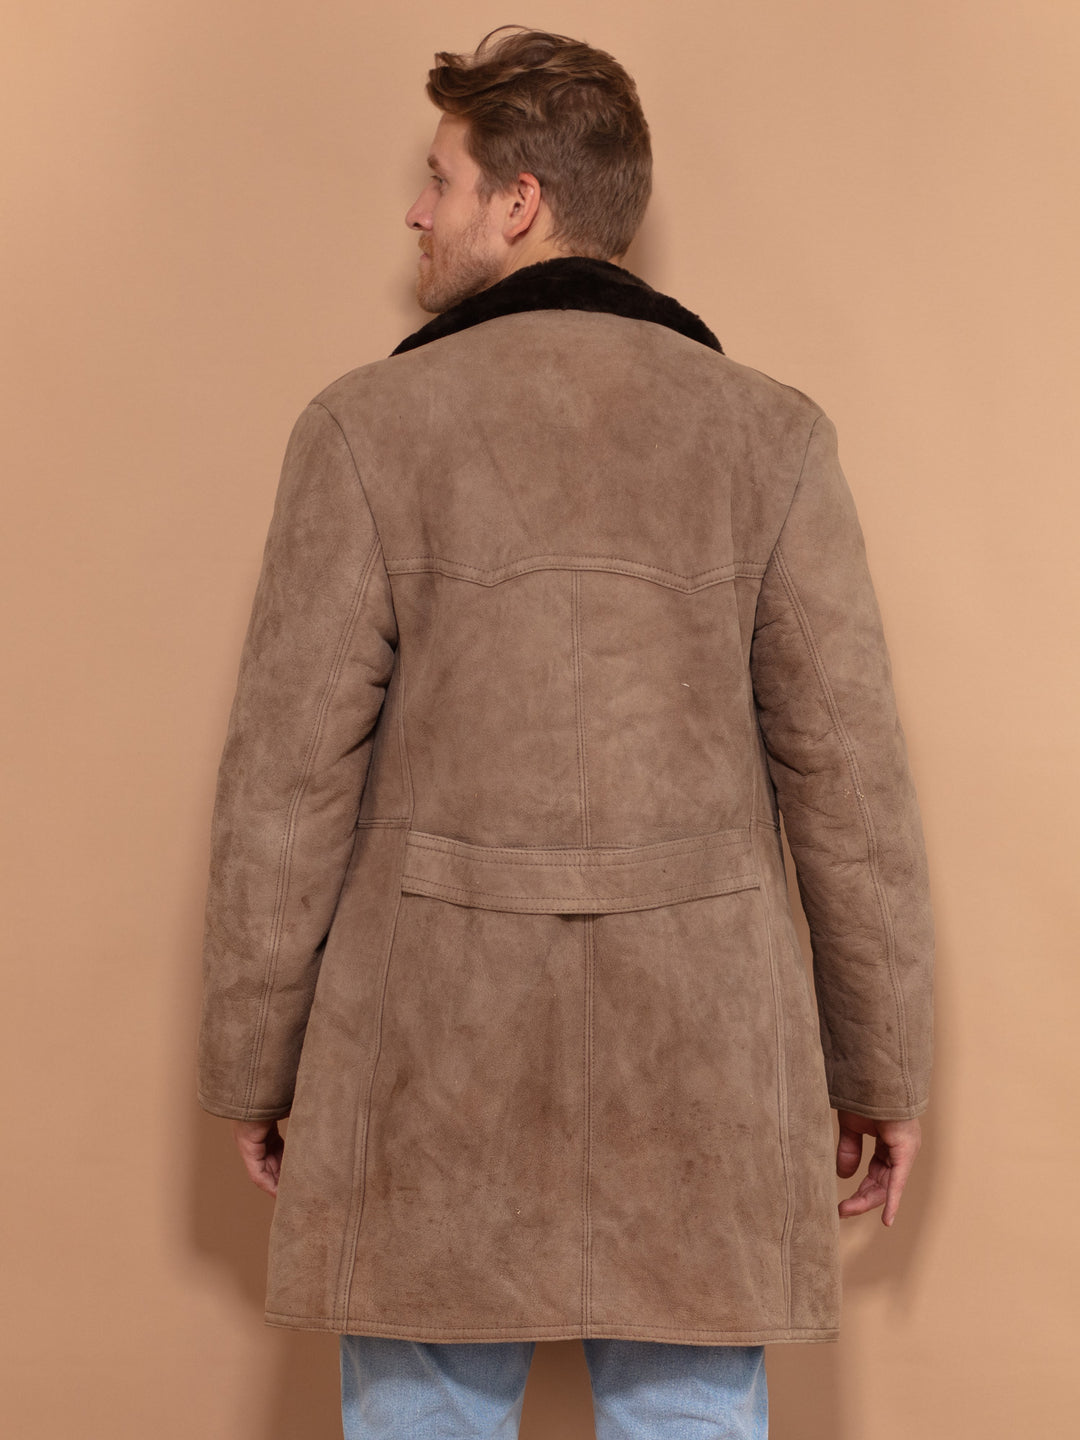 Boho Men Sheepskin Coat 70s, Size Medium, Vintage Men Shearling Wool Collar Coat, Pale Brown Suede Coat, Winter Outerwear, Cowboy Wear